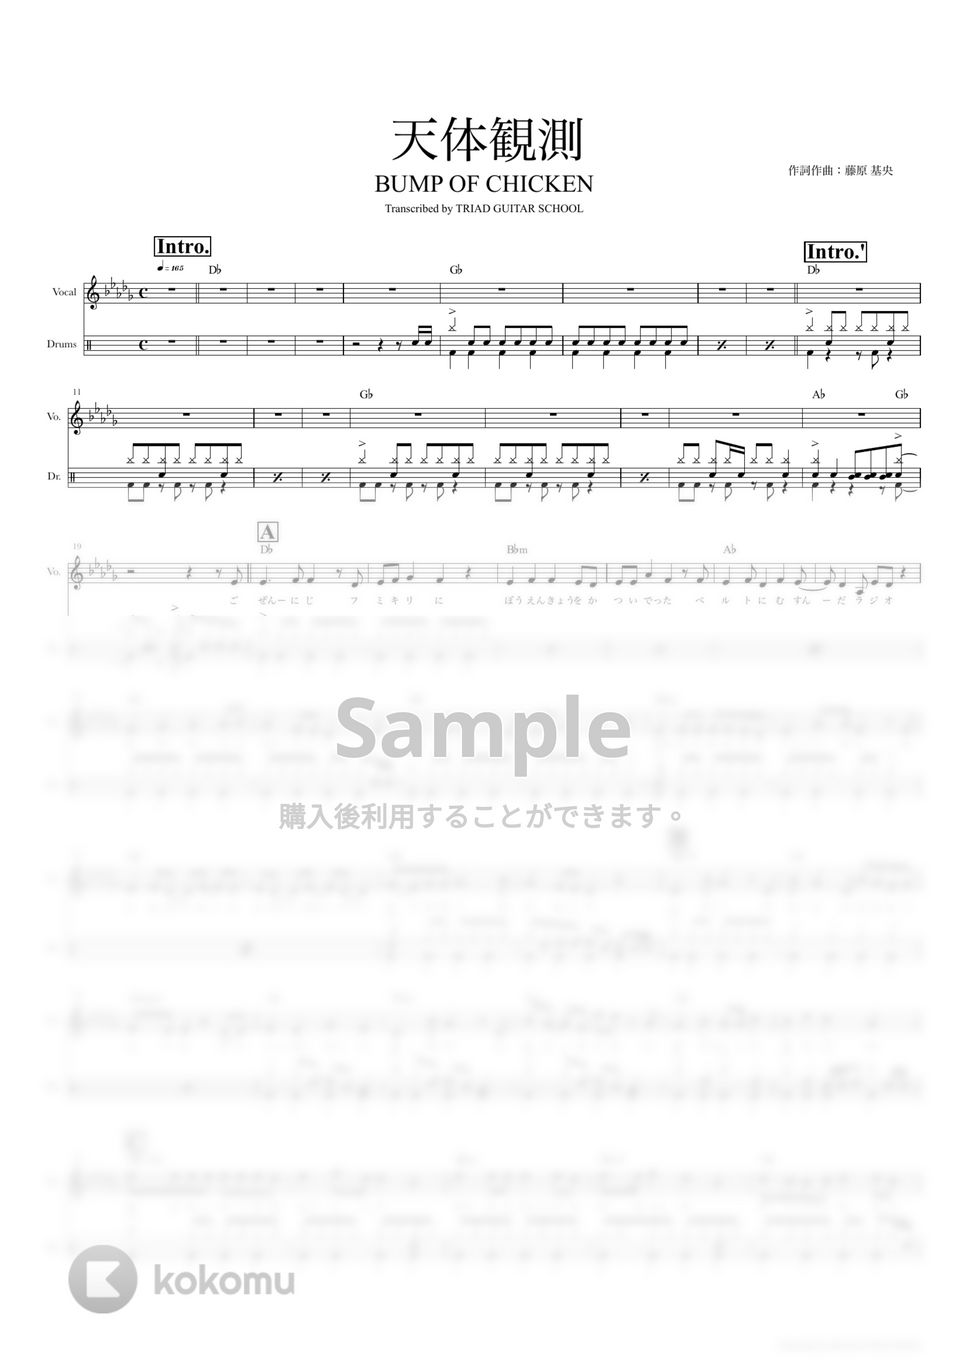 BUMP OF CHICKEN - 天体観測 (ドラムスコア・歌詞・コード付き) by TRIAD GUITAR SCHOOL